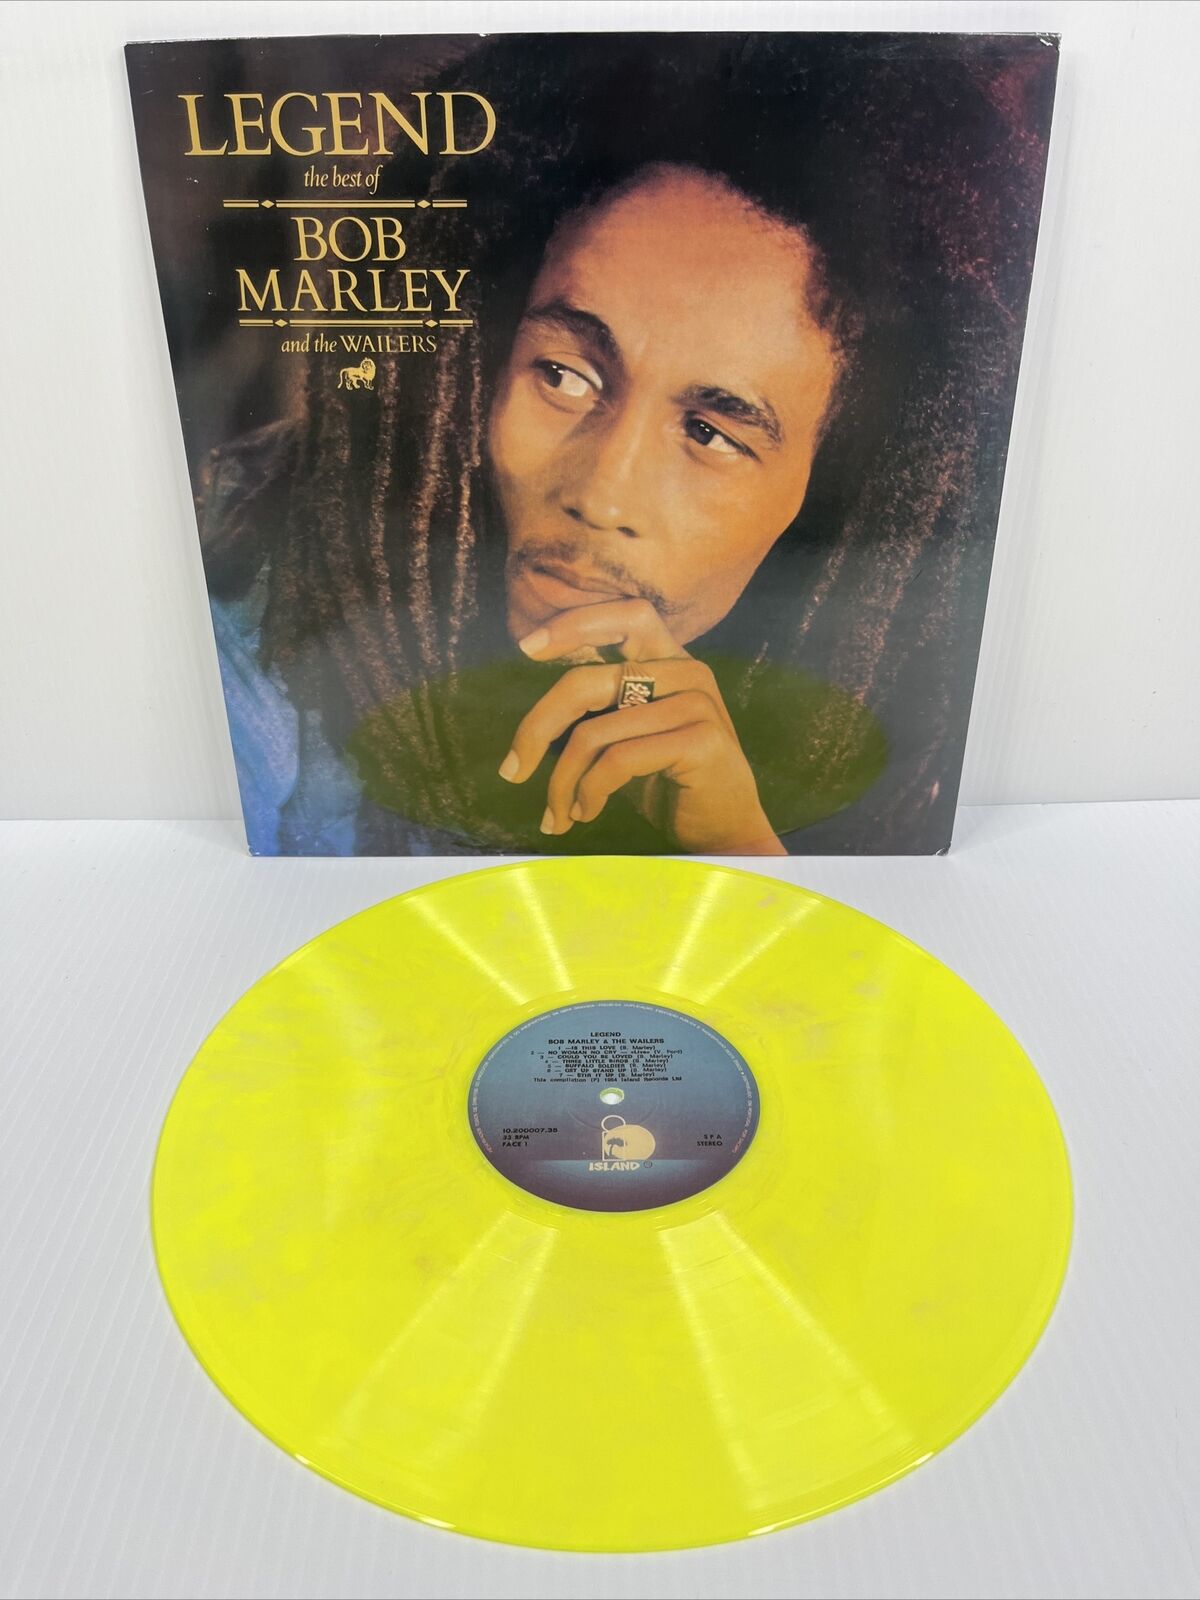 Bob Marley & the Wailers - Legend (Best of) LP Island Records Yellow Vinyl VG+